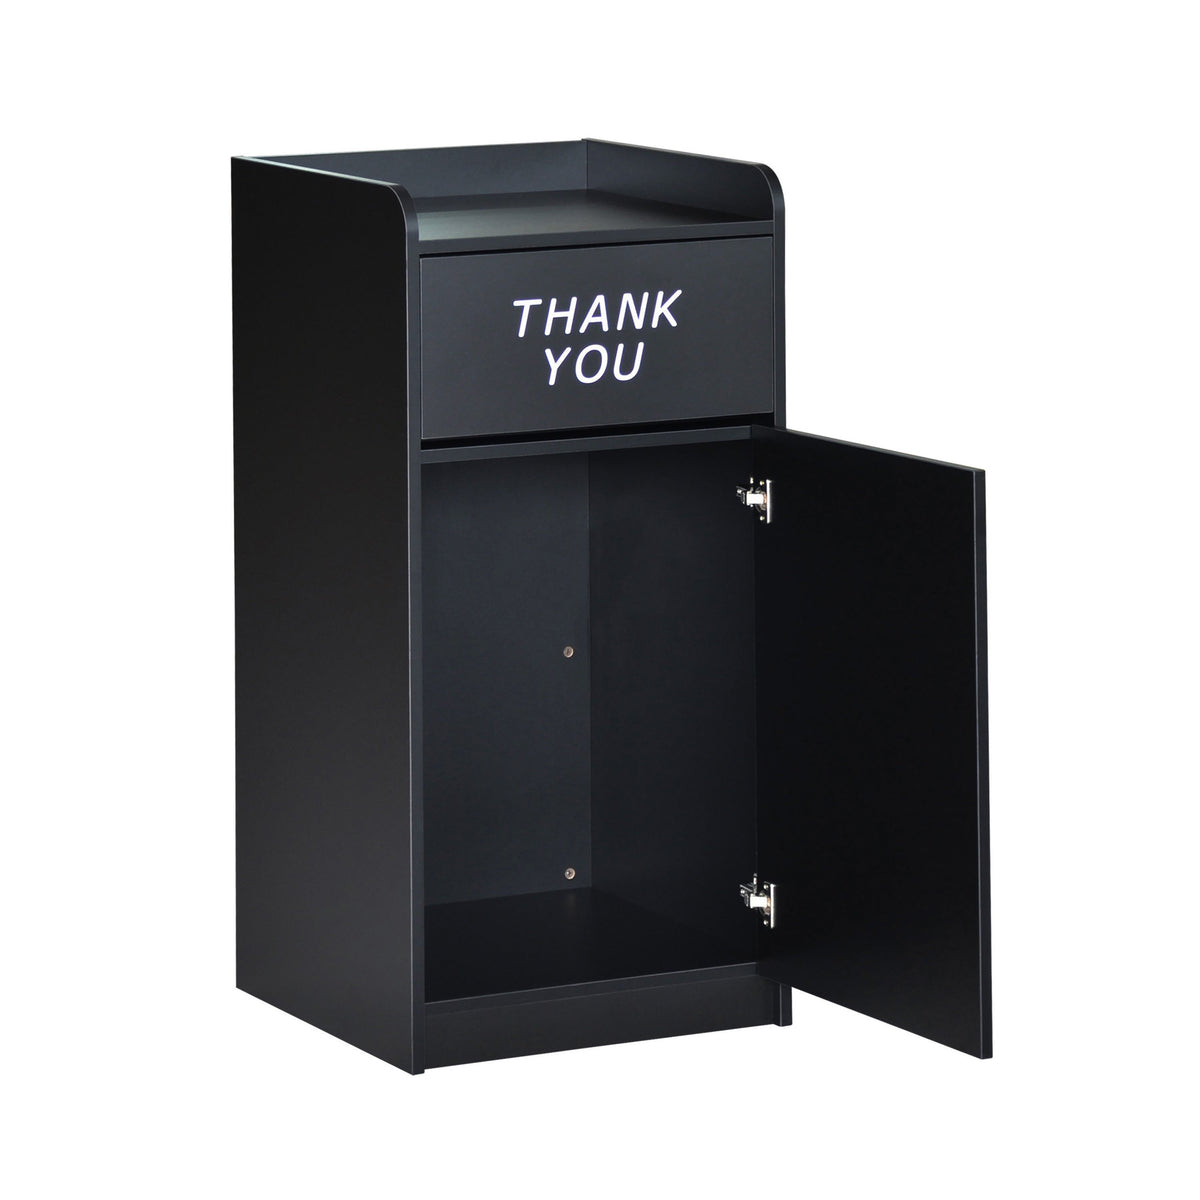 Black |#| Wood Tray Top Receptacle in Black - Commercial Grade Push Door Trash Can